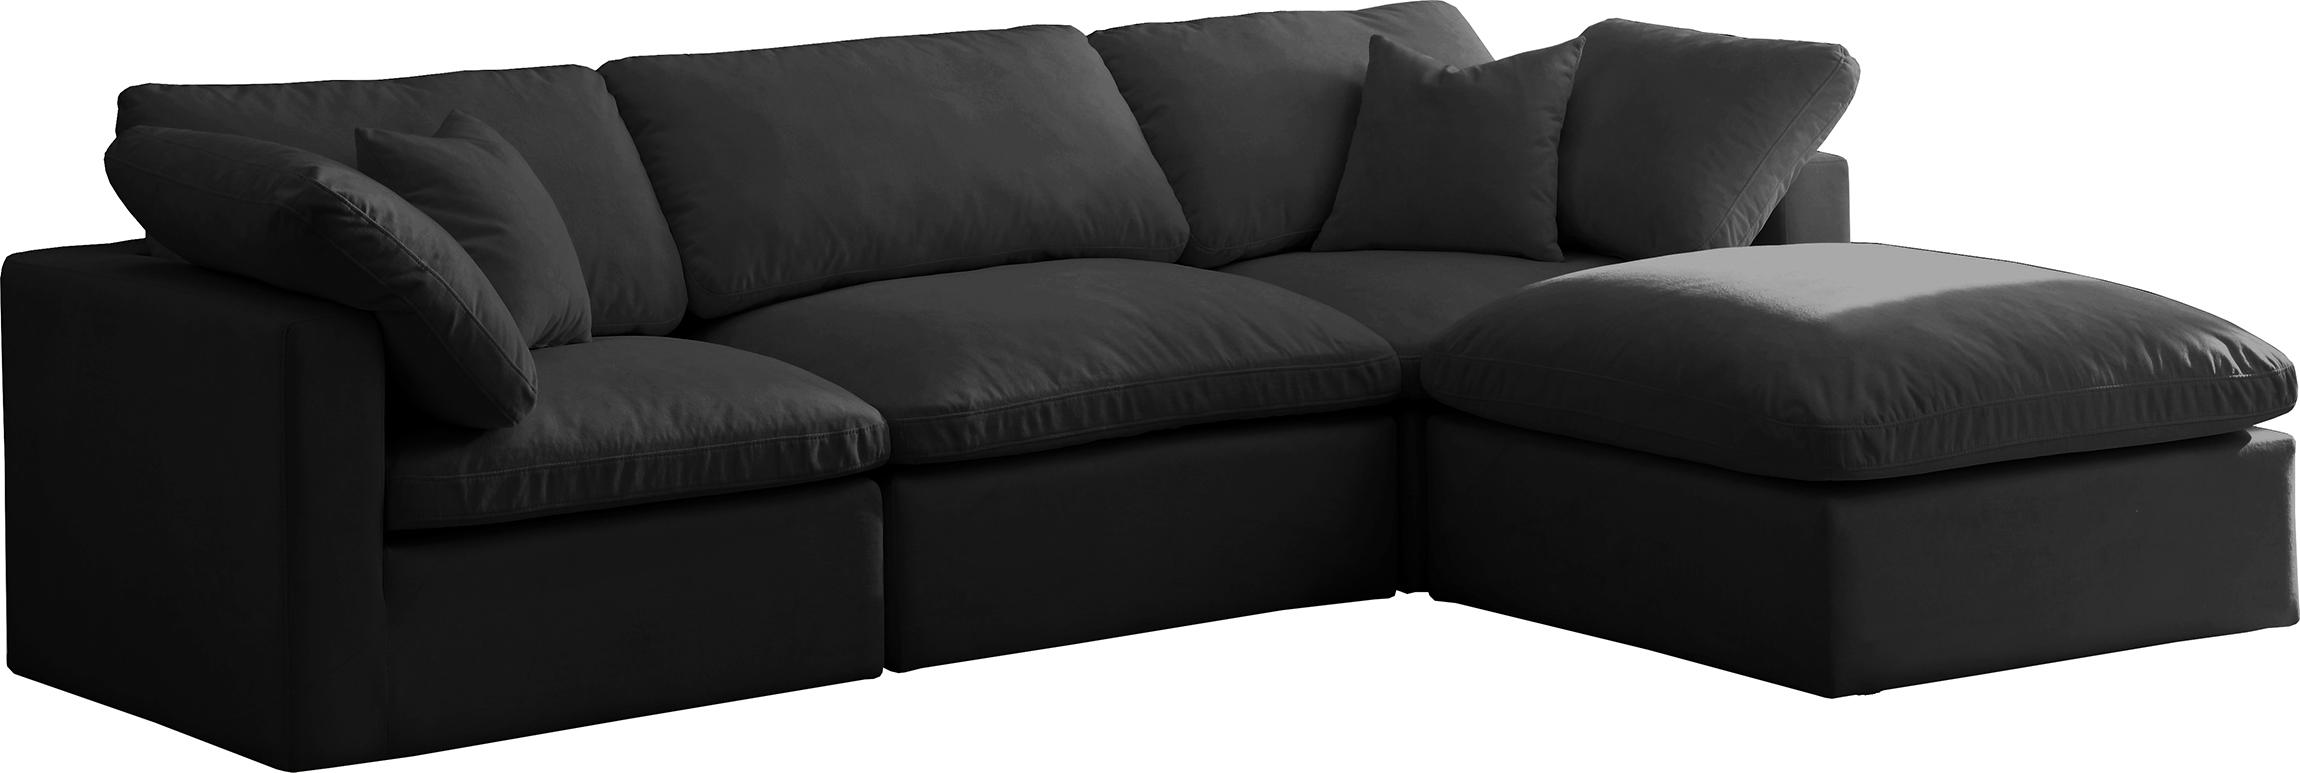 Contemporary, Modern Modular Sectional Sofa Cloud BLACK 602Black-Sec4A in Black Fabric